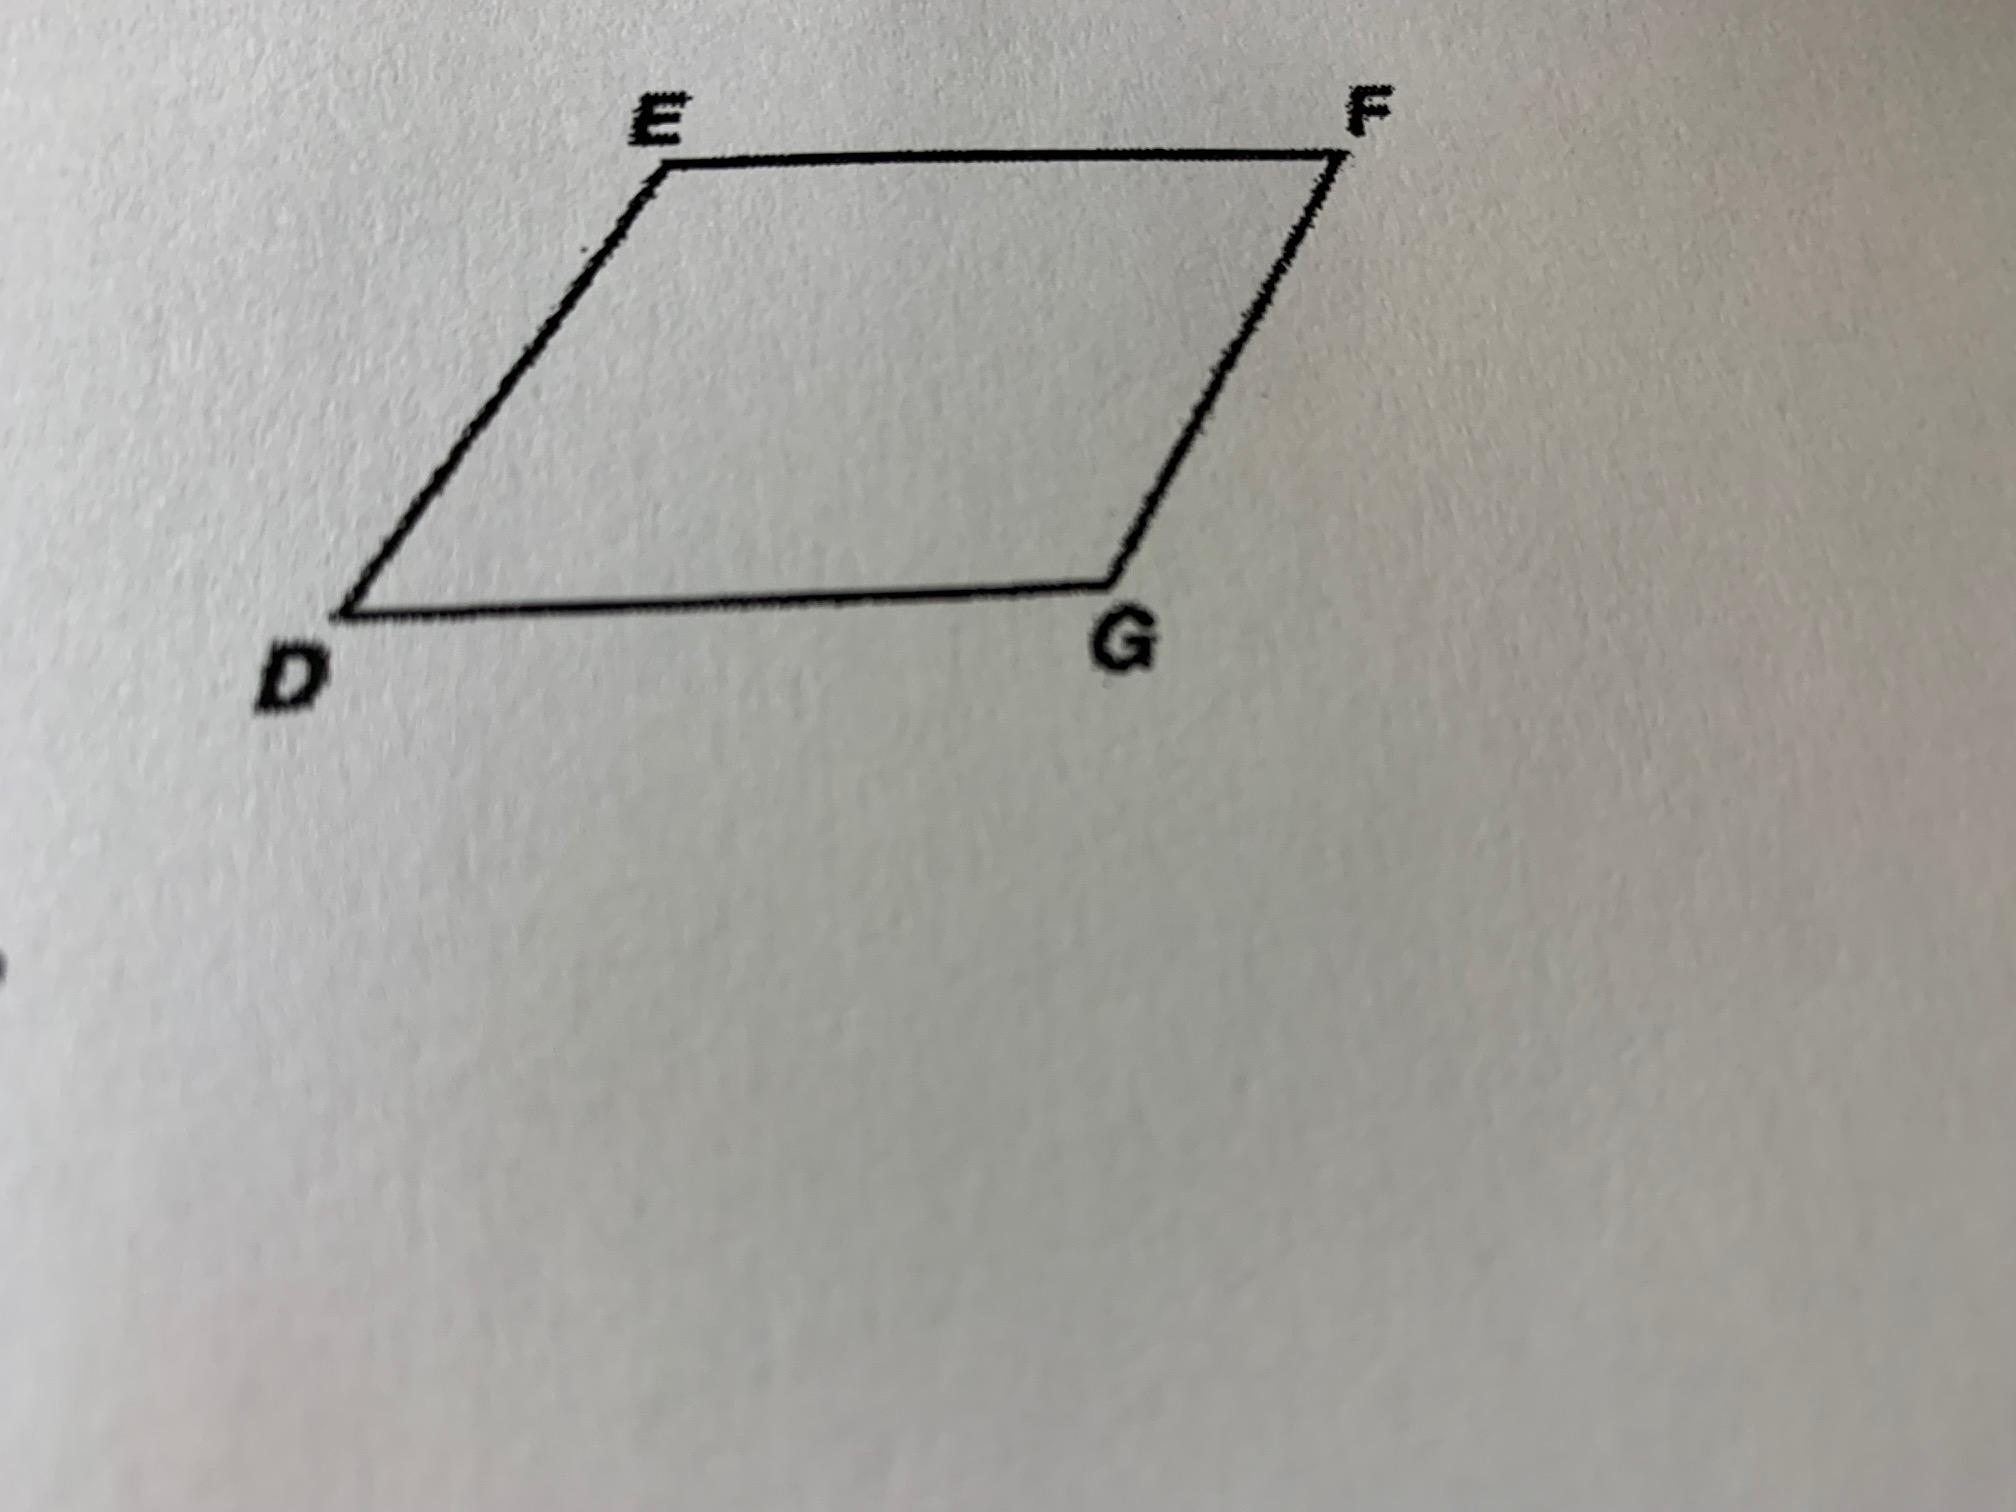 Figure DEFG Is A Parallelogram.If M 